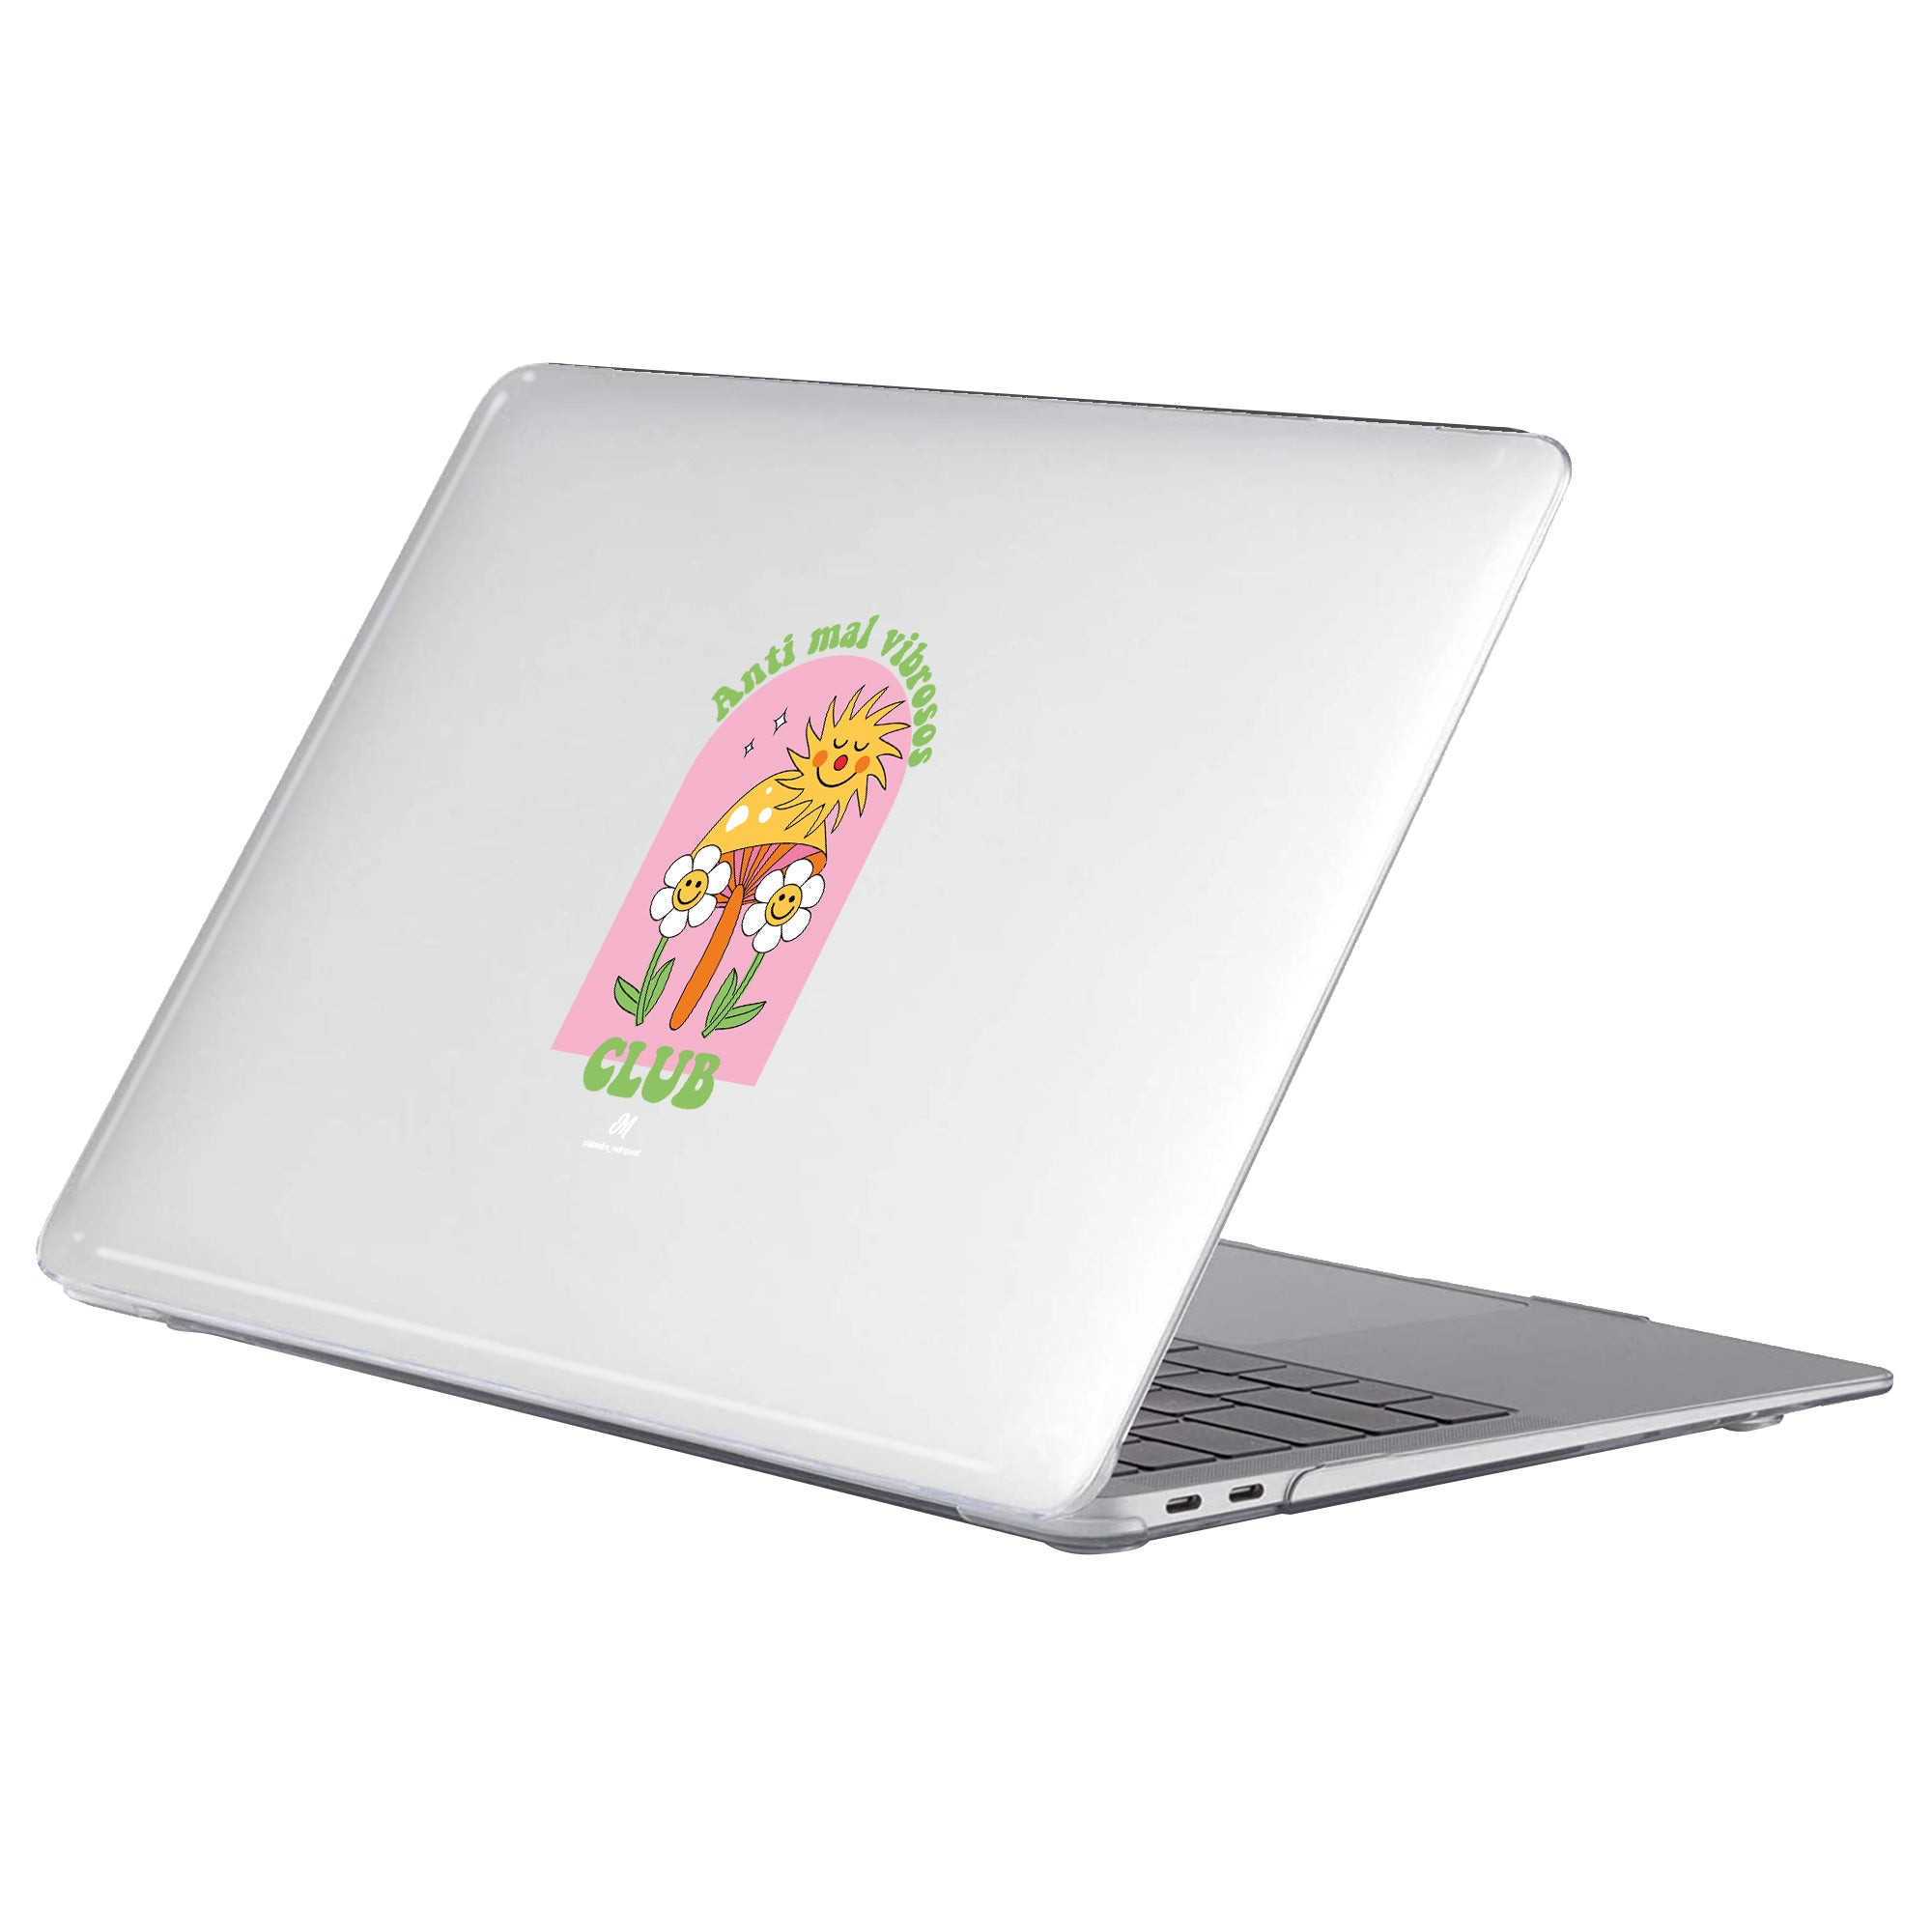 Anti Mal Vibrosos Club MacBook Case - Mandala Cases